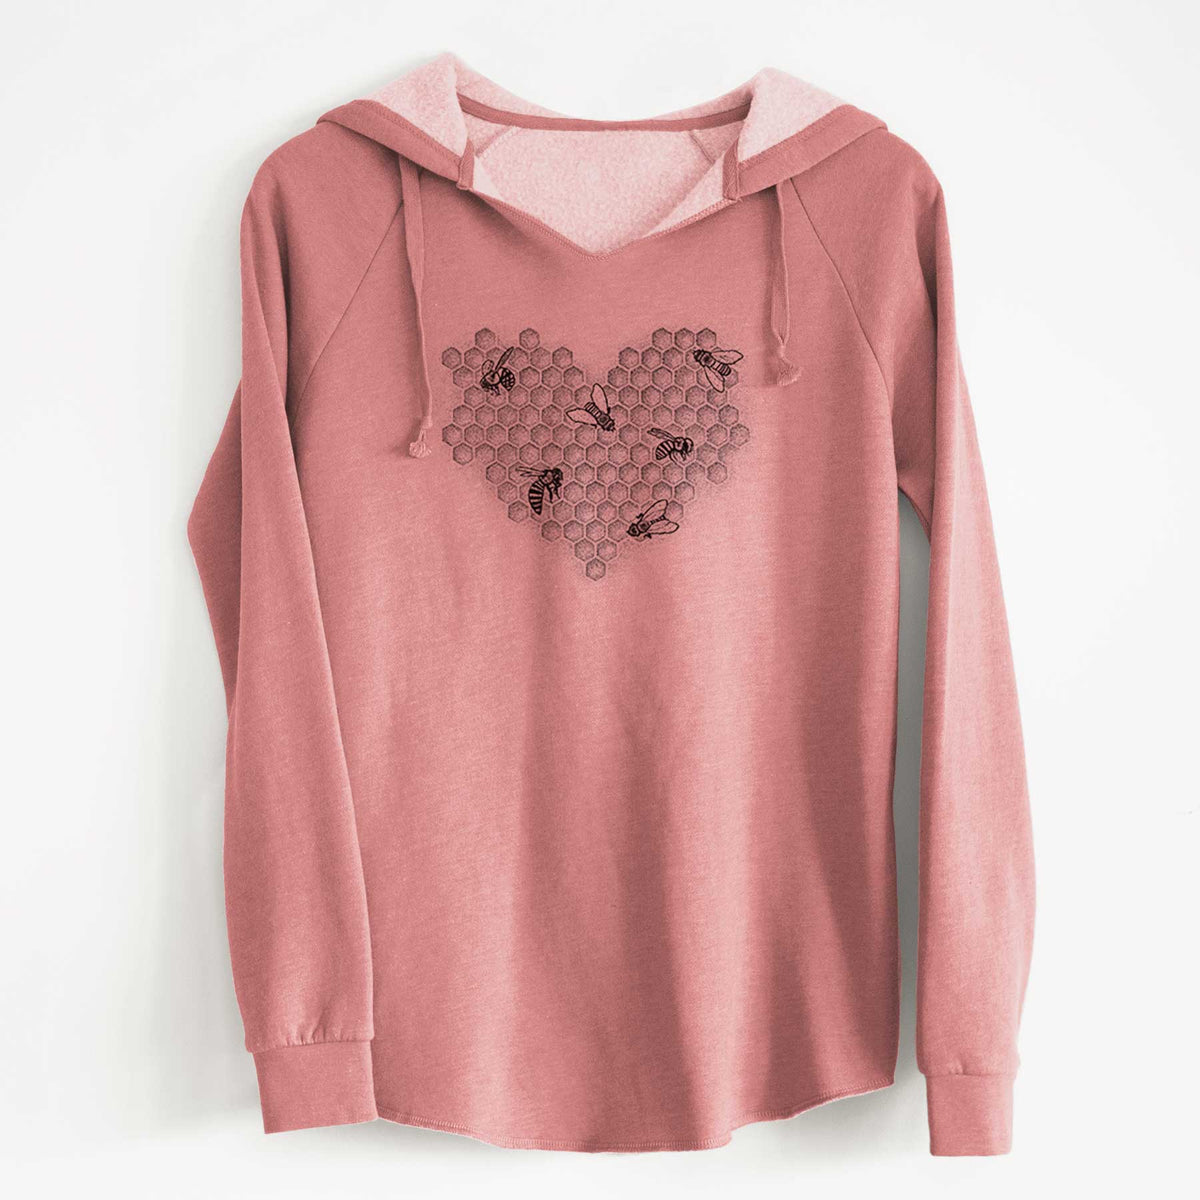 Honeycomb Heart with Bees - Cali Wave Hooded Sweatshirt